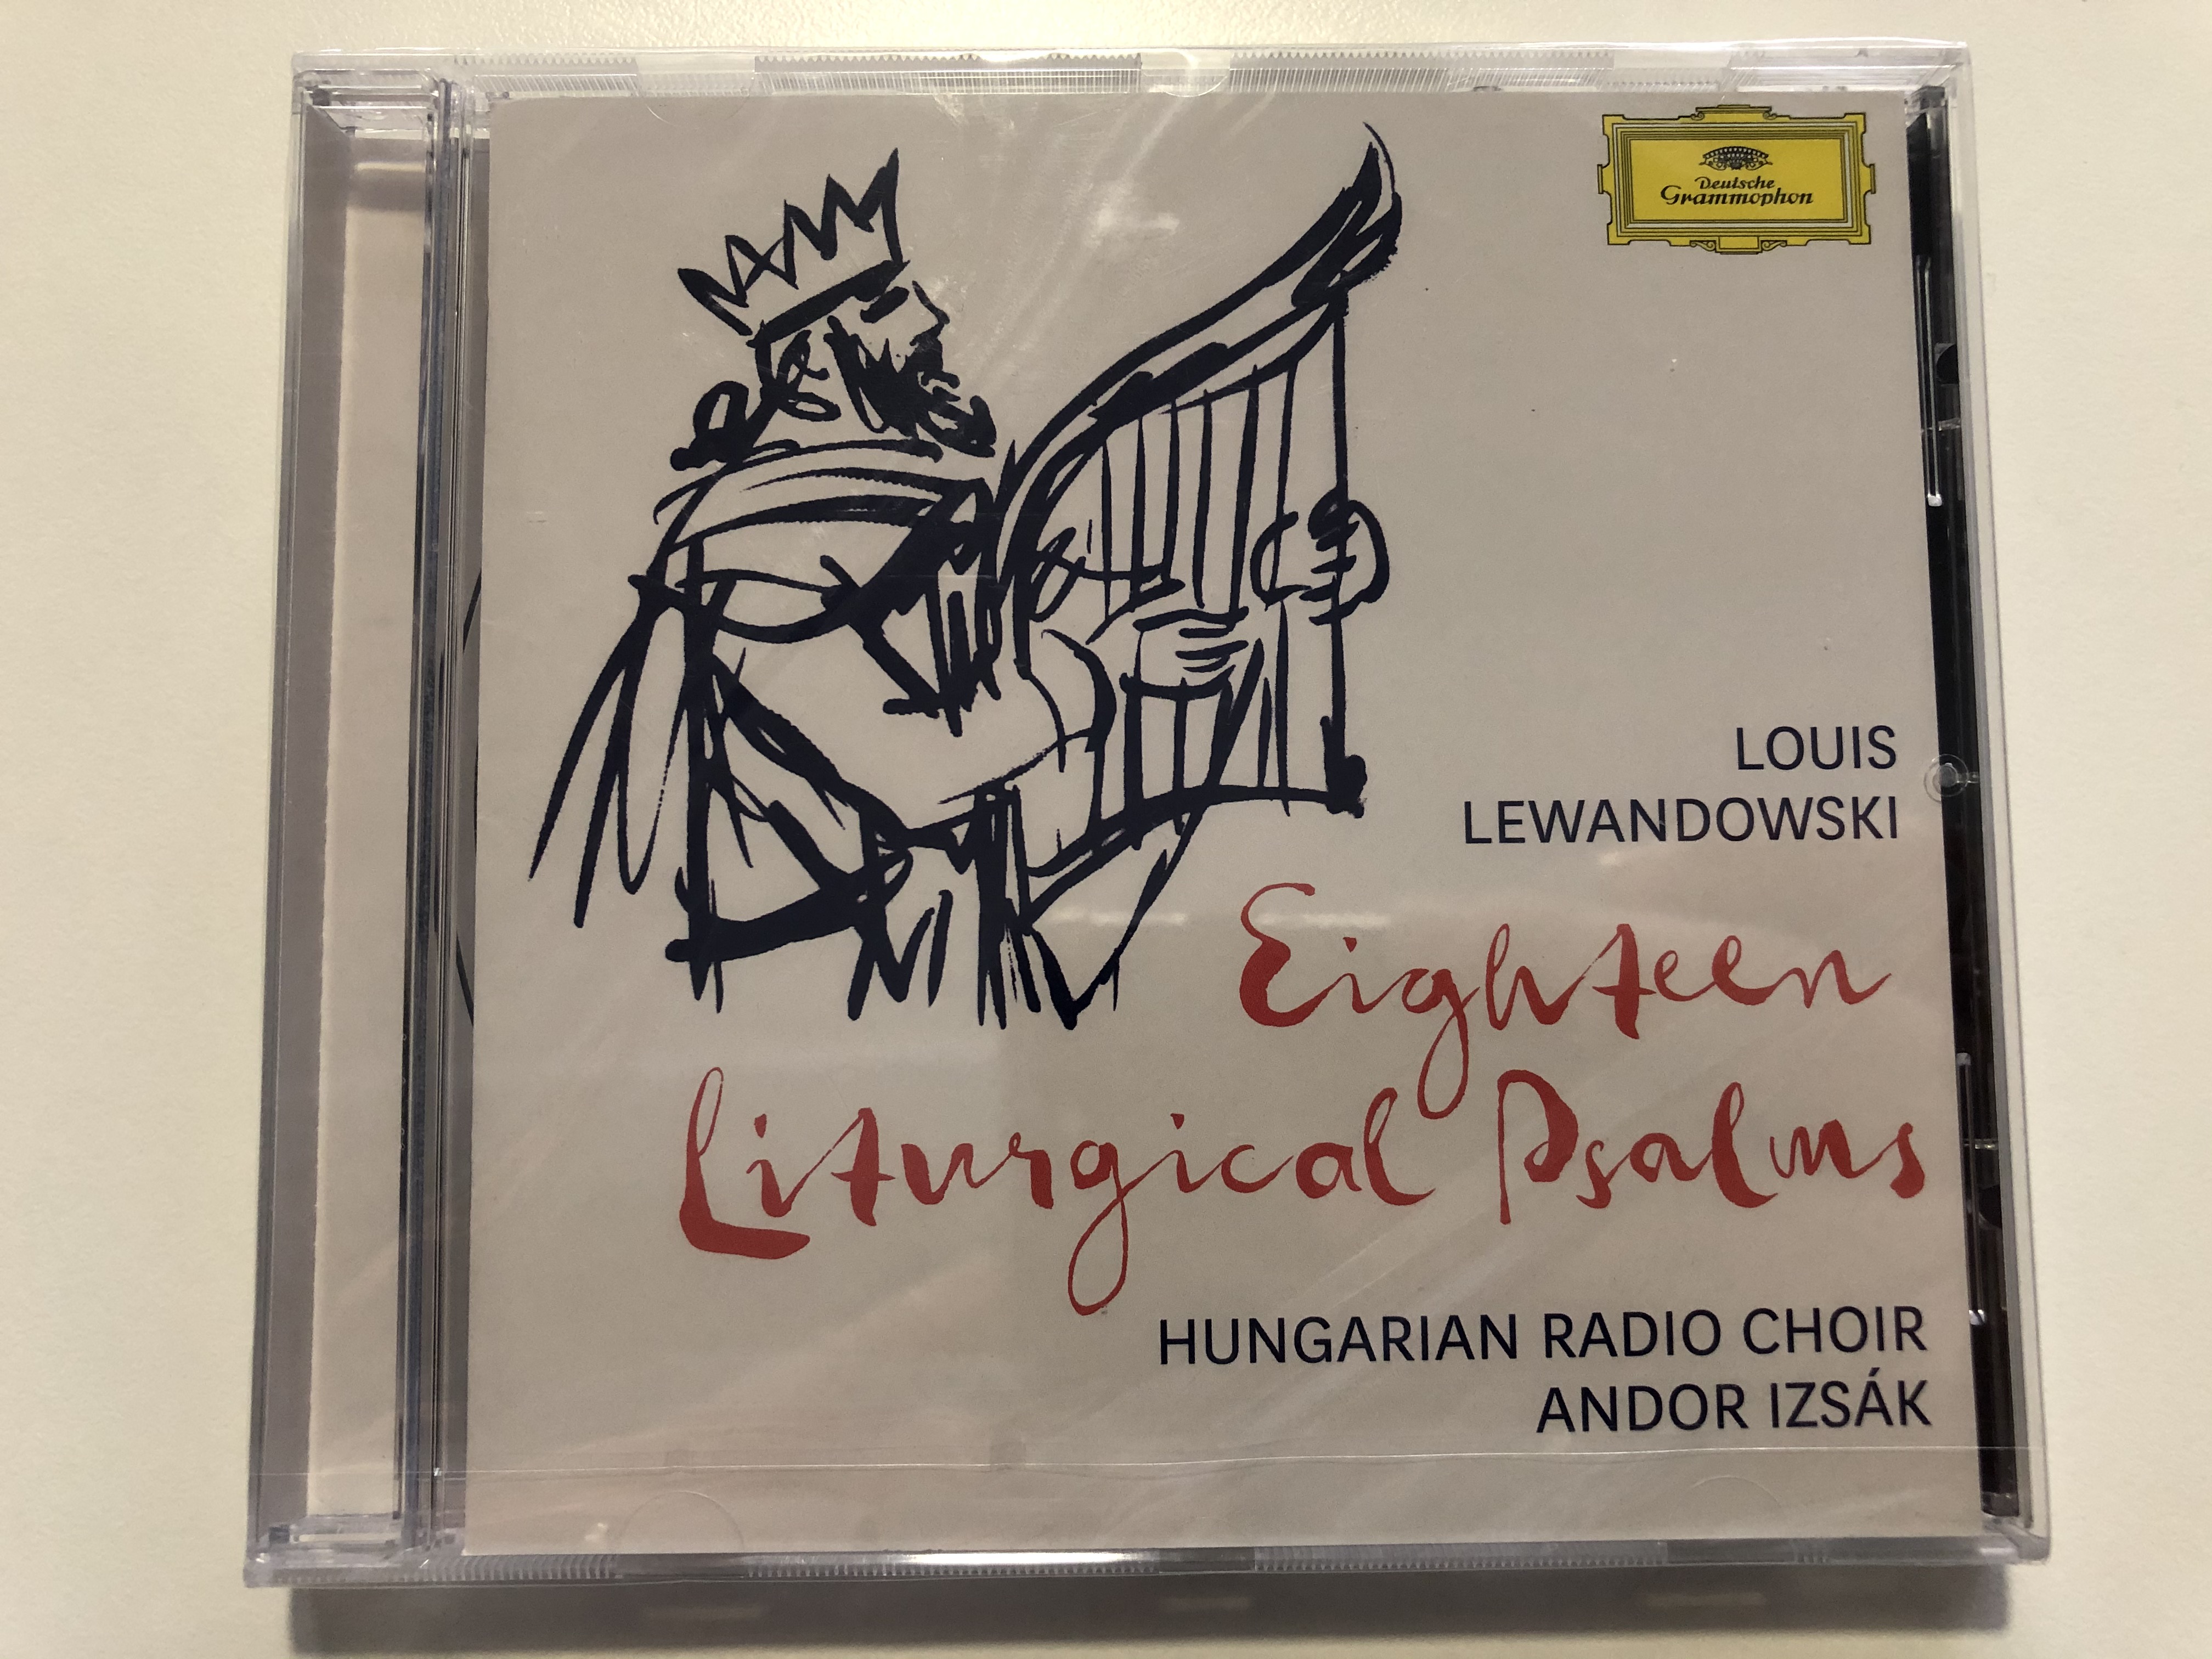 louis-lewandowski-eighteen-liturgical-psalms-hungarian-radio-choir-andor-izsak-deutsche-grammophon-audio-cd-2020-483-7724-1-.jpg